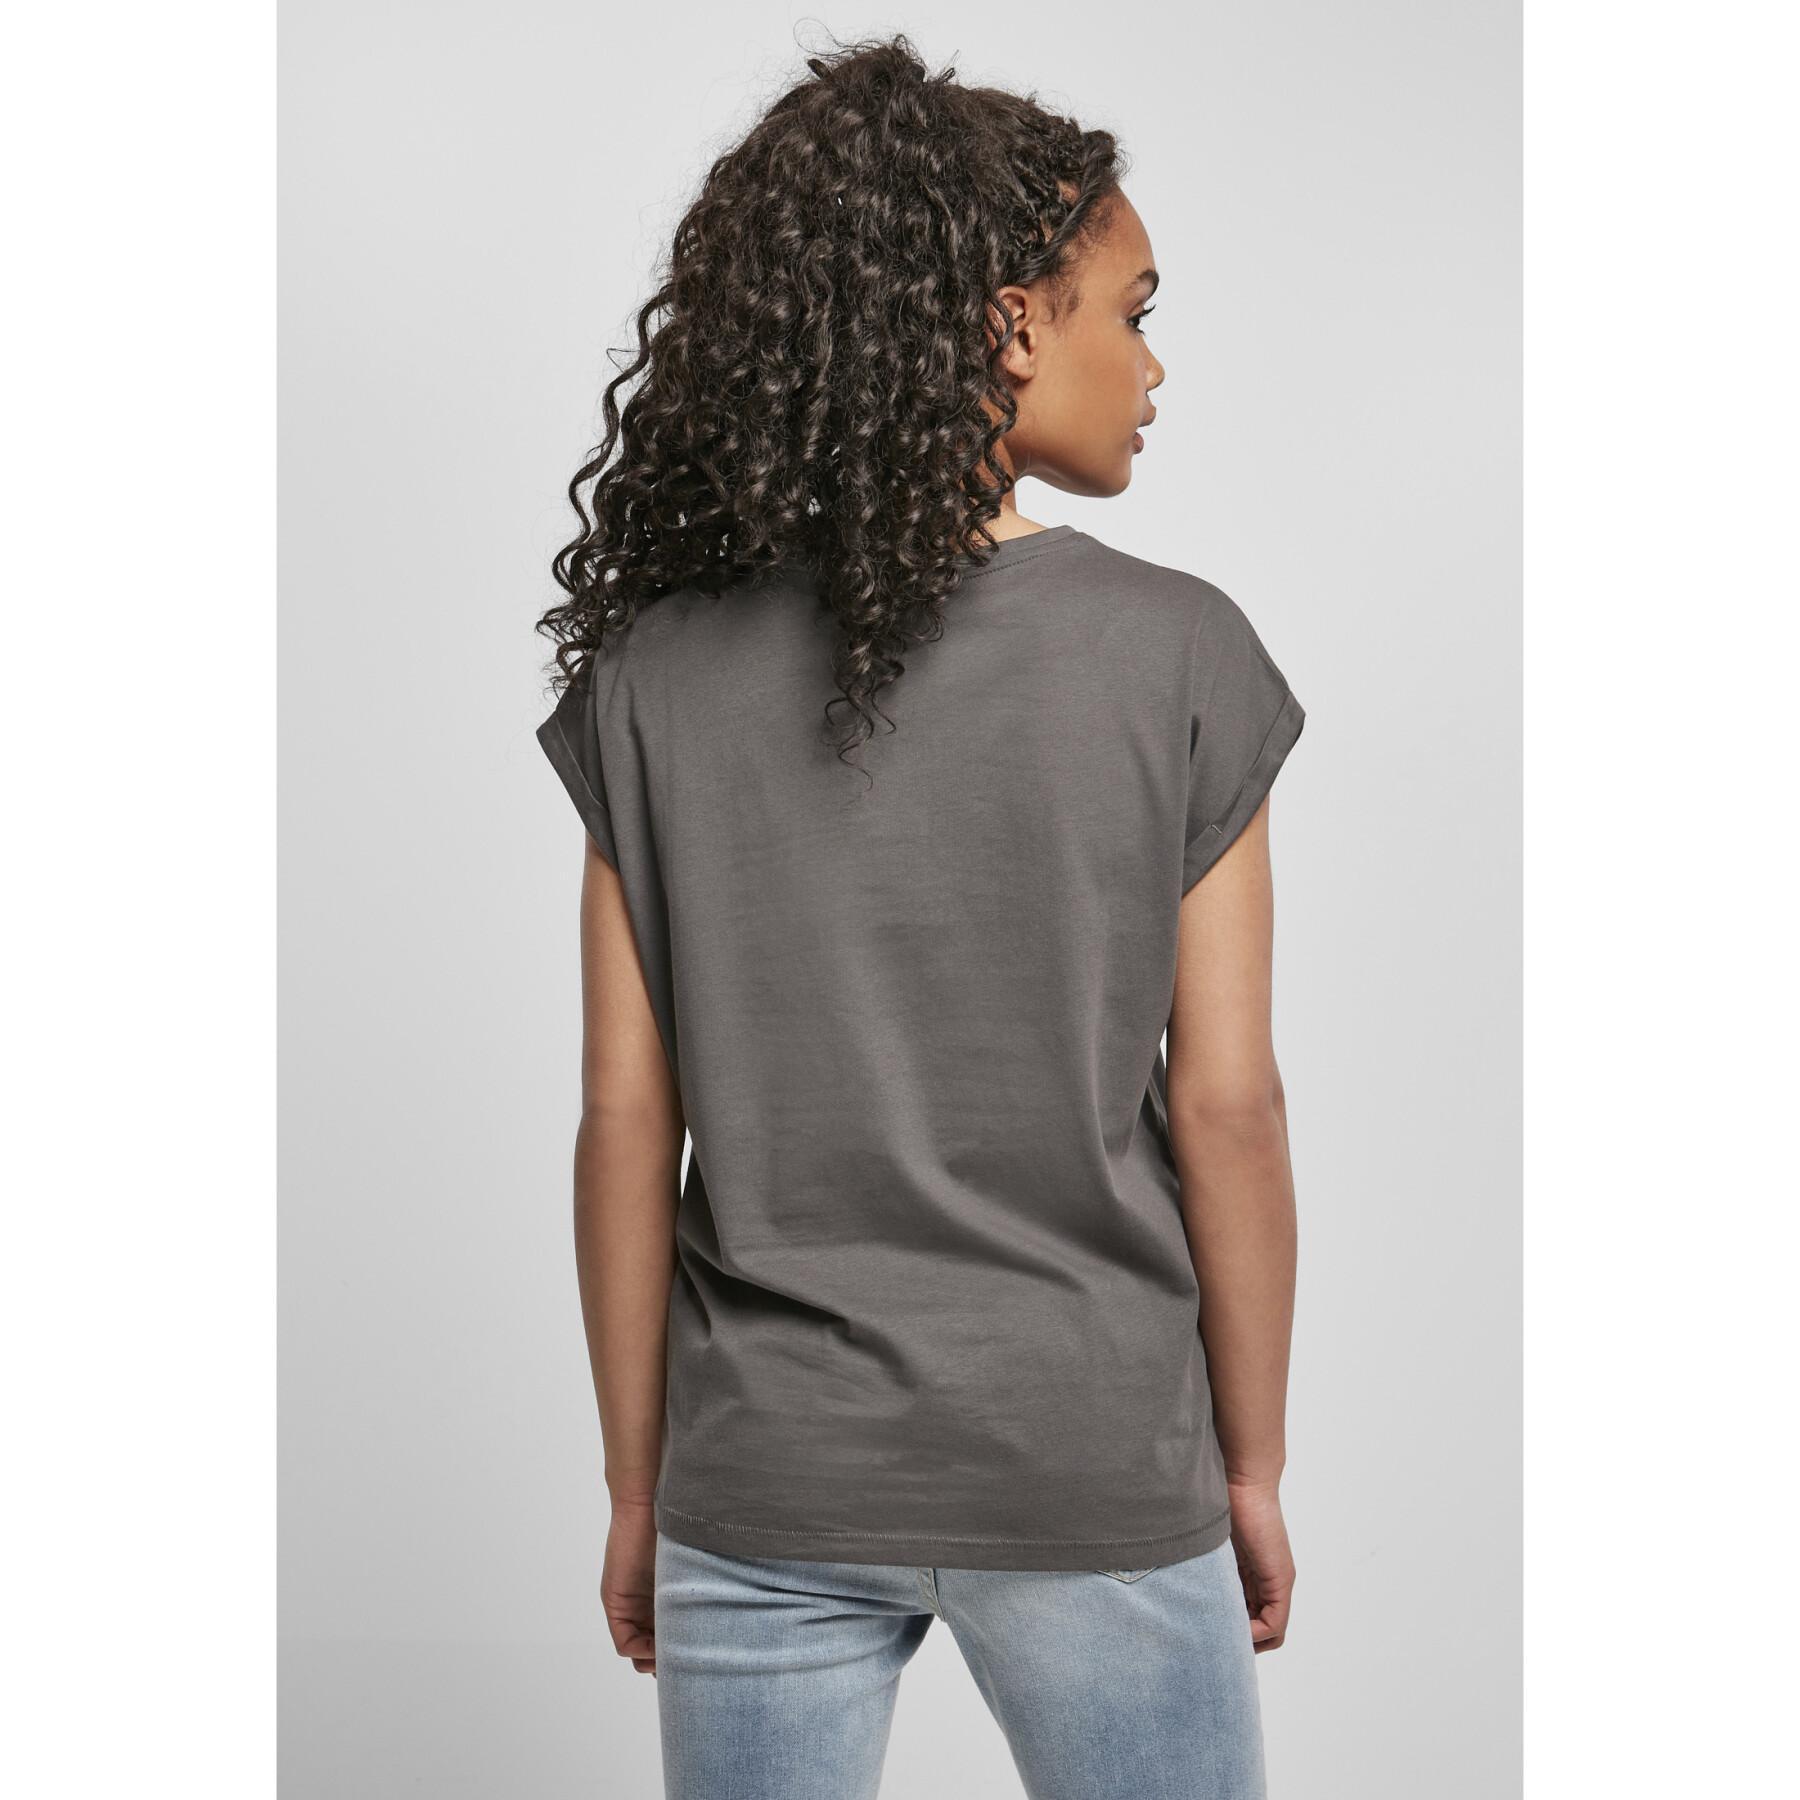 Women's T-shirt Urban Classics extended shoulder-grandes tailles